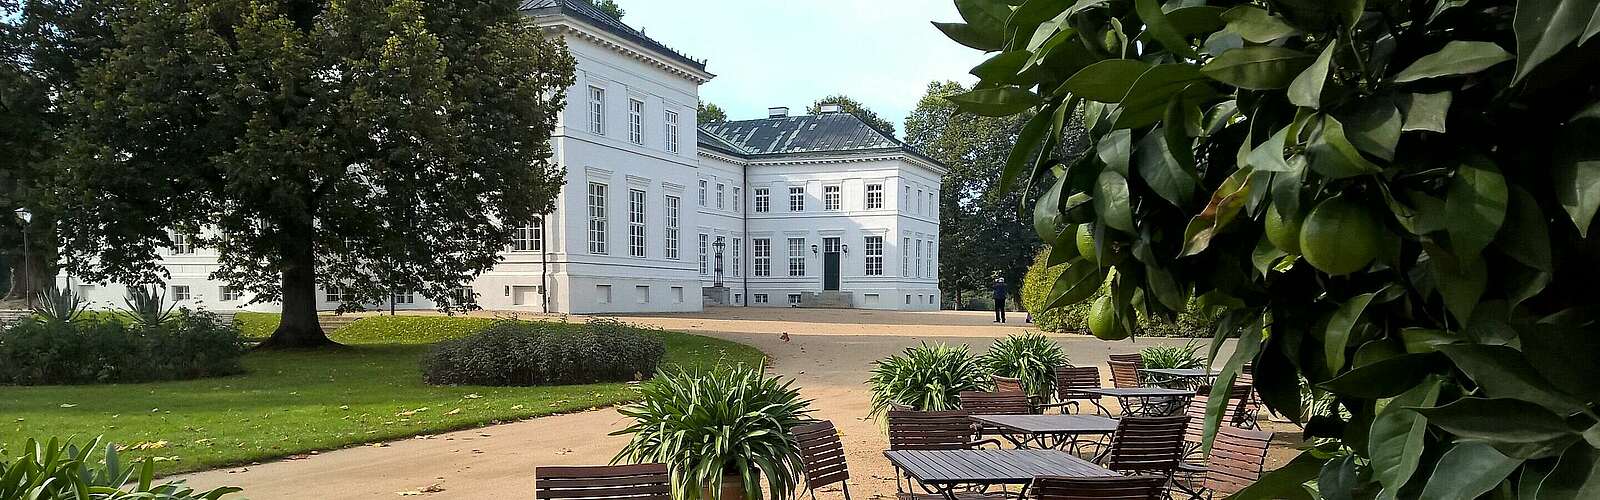 Schloss Neuhardenberg,
        
    

        Foto: Fotograf / Lizenz - Media Import/Heidi Walter